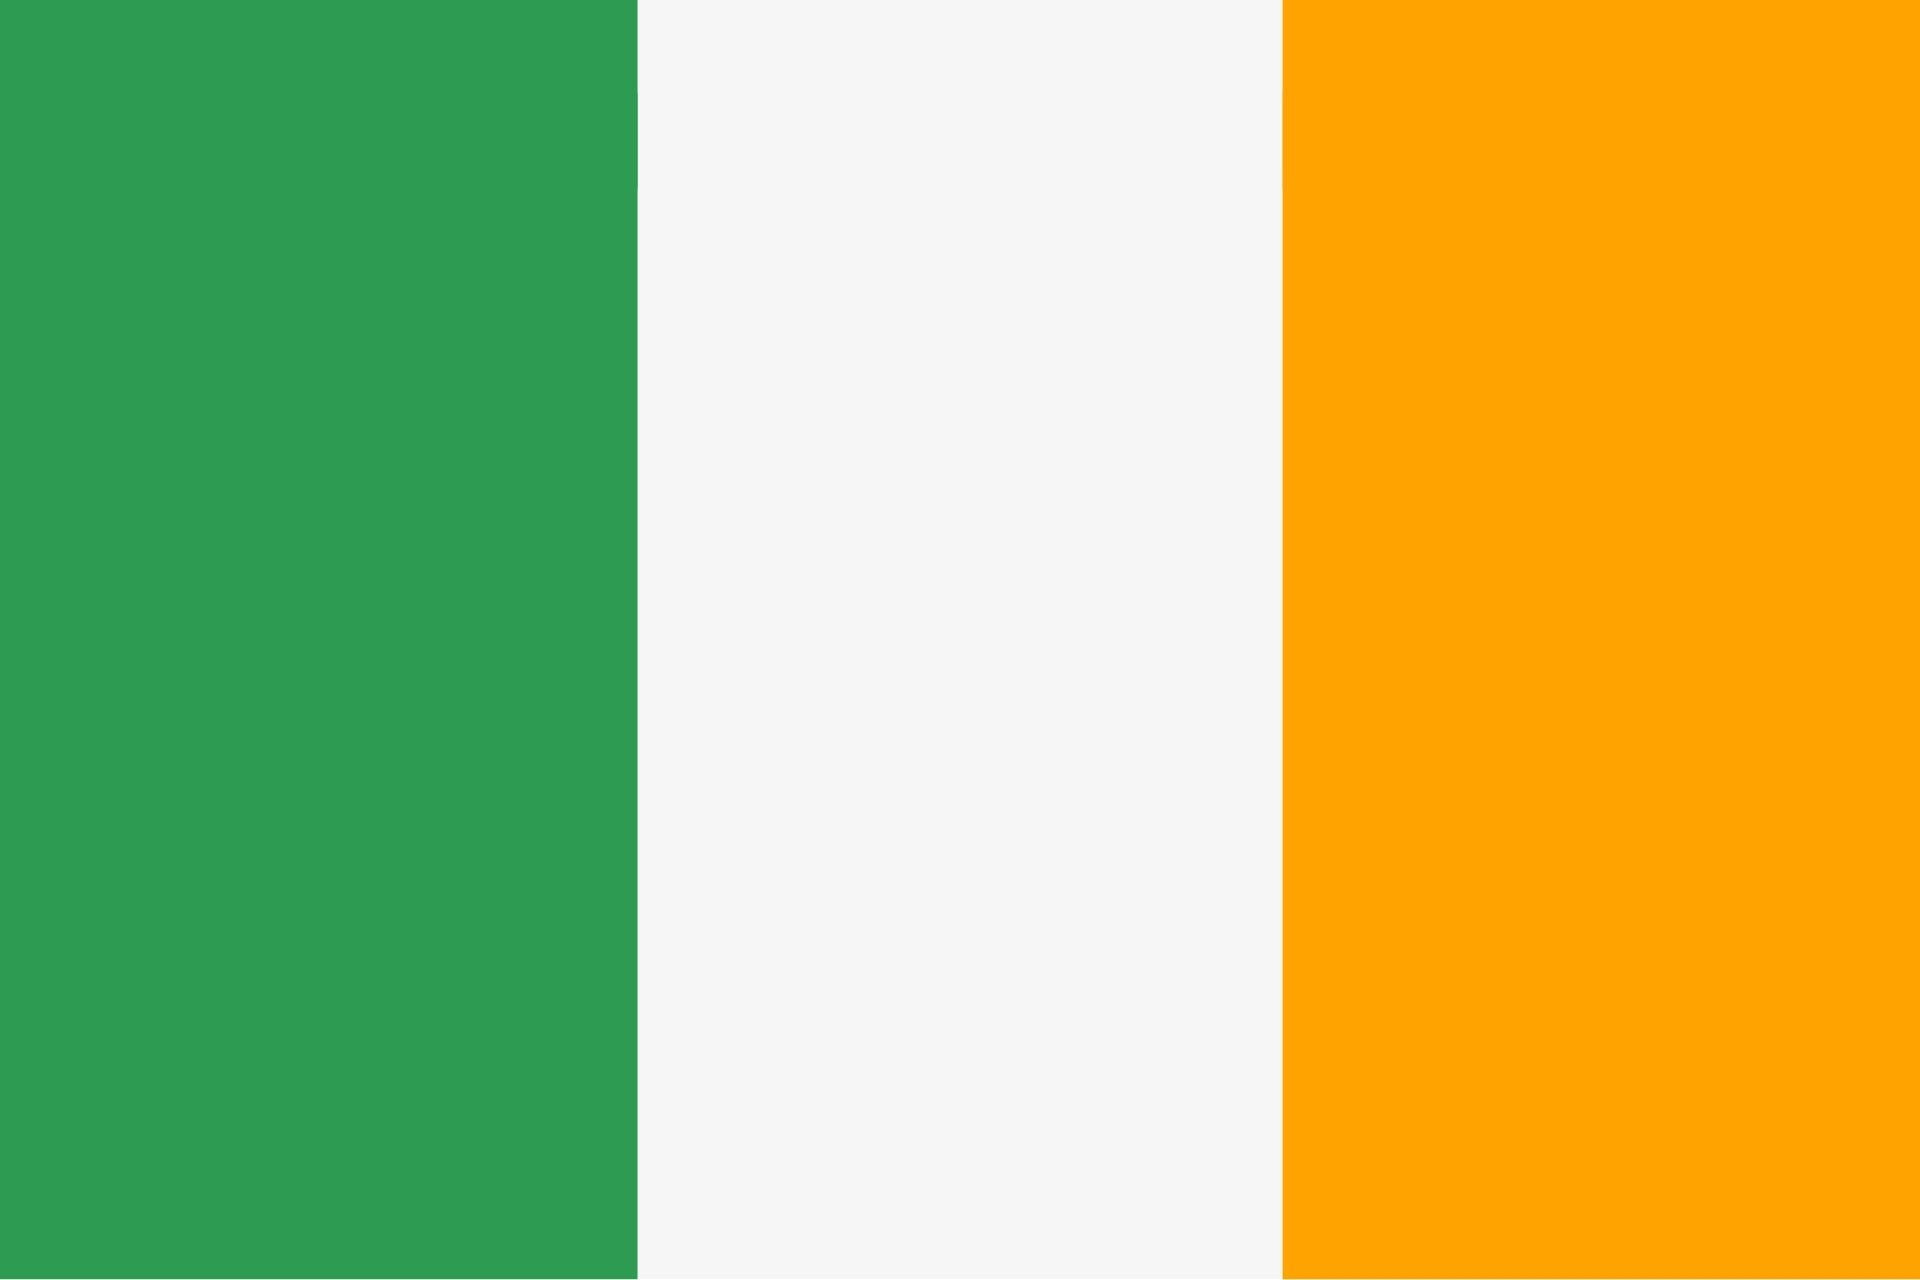 Cộng hòa Ireland